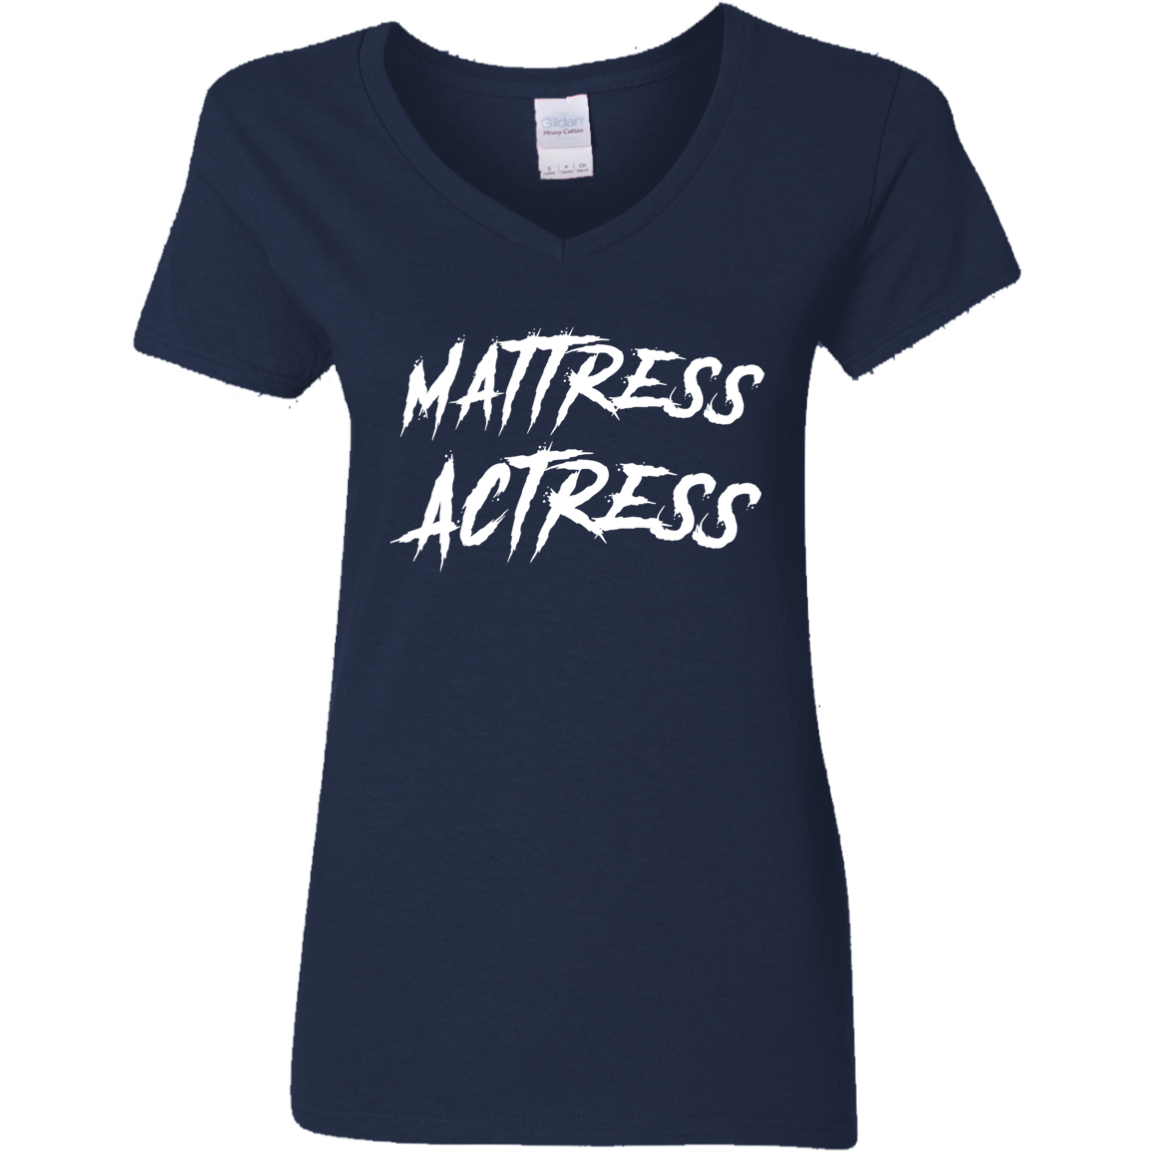 "Mattress Actress" Ladies' 5.3 oz. V-Neck T-Shirt